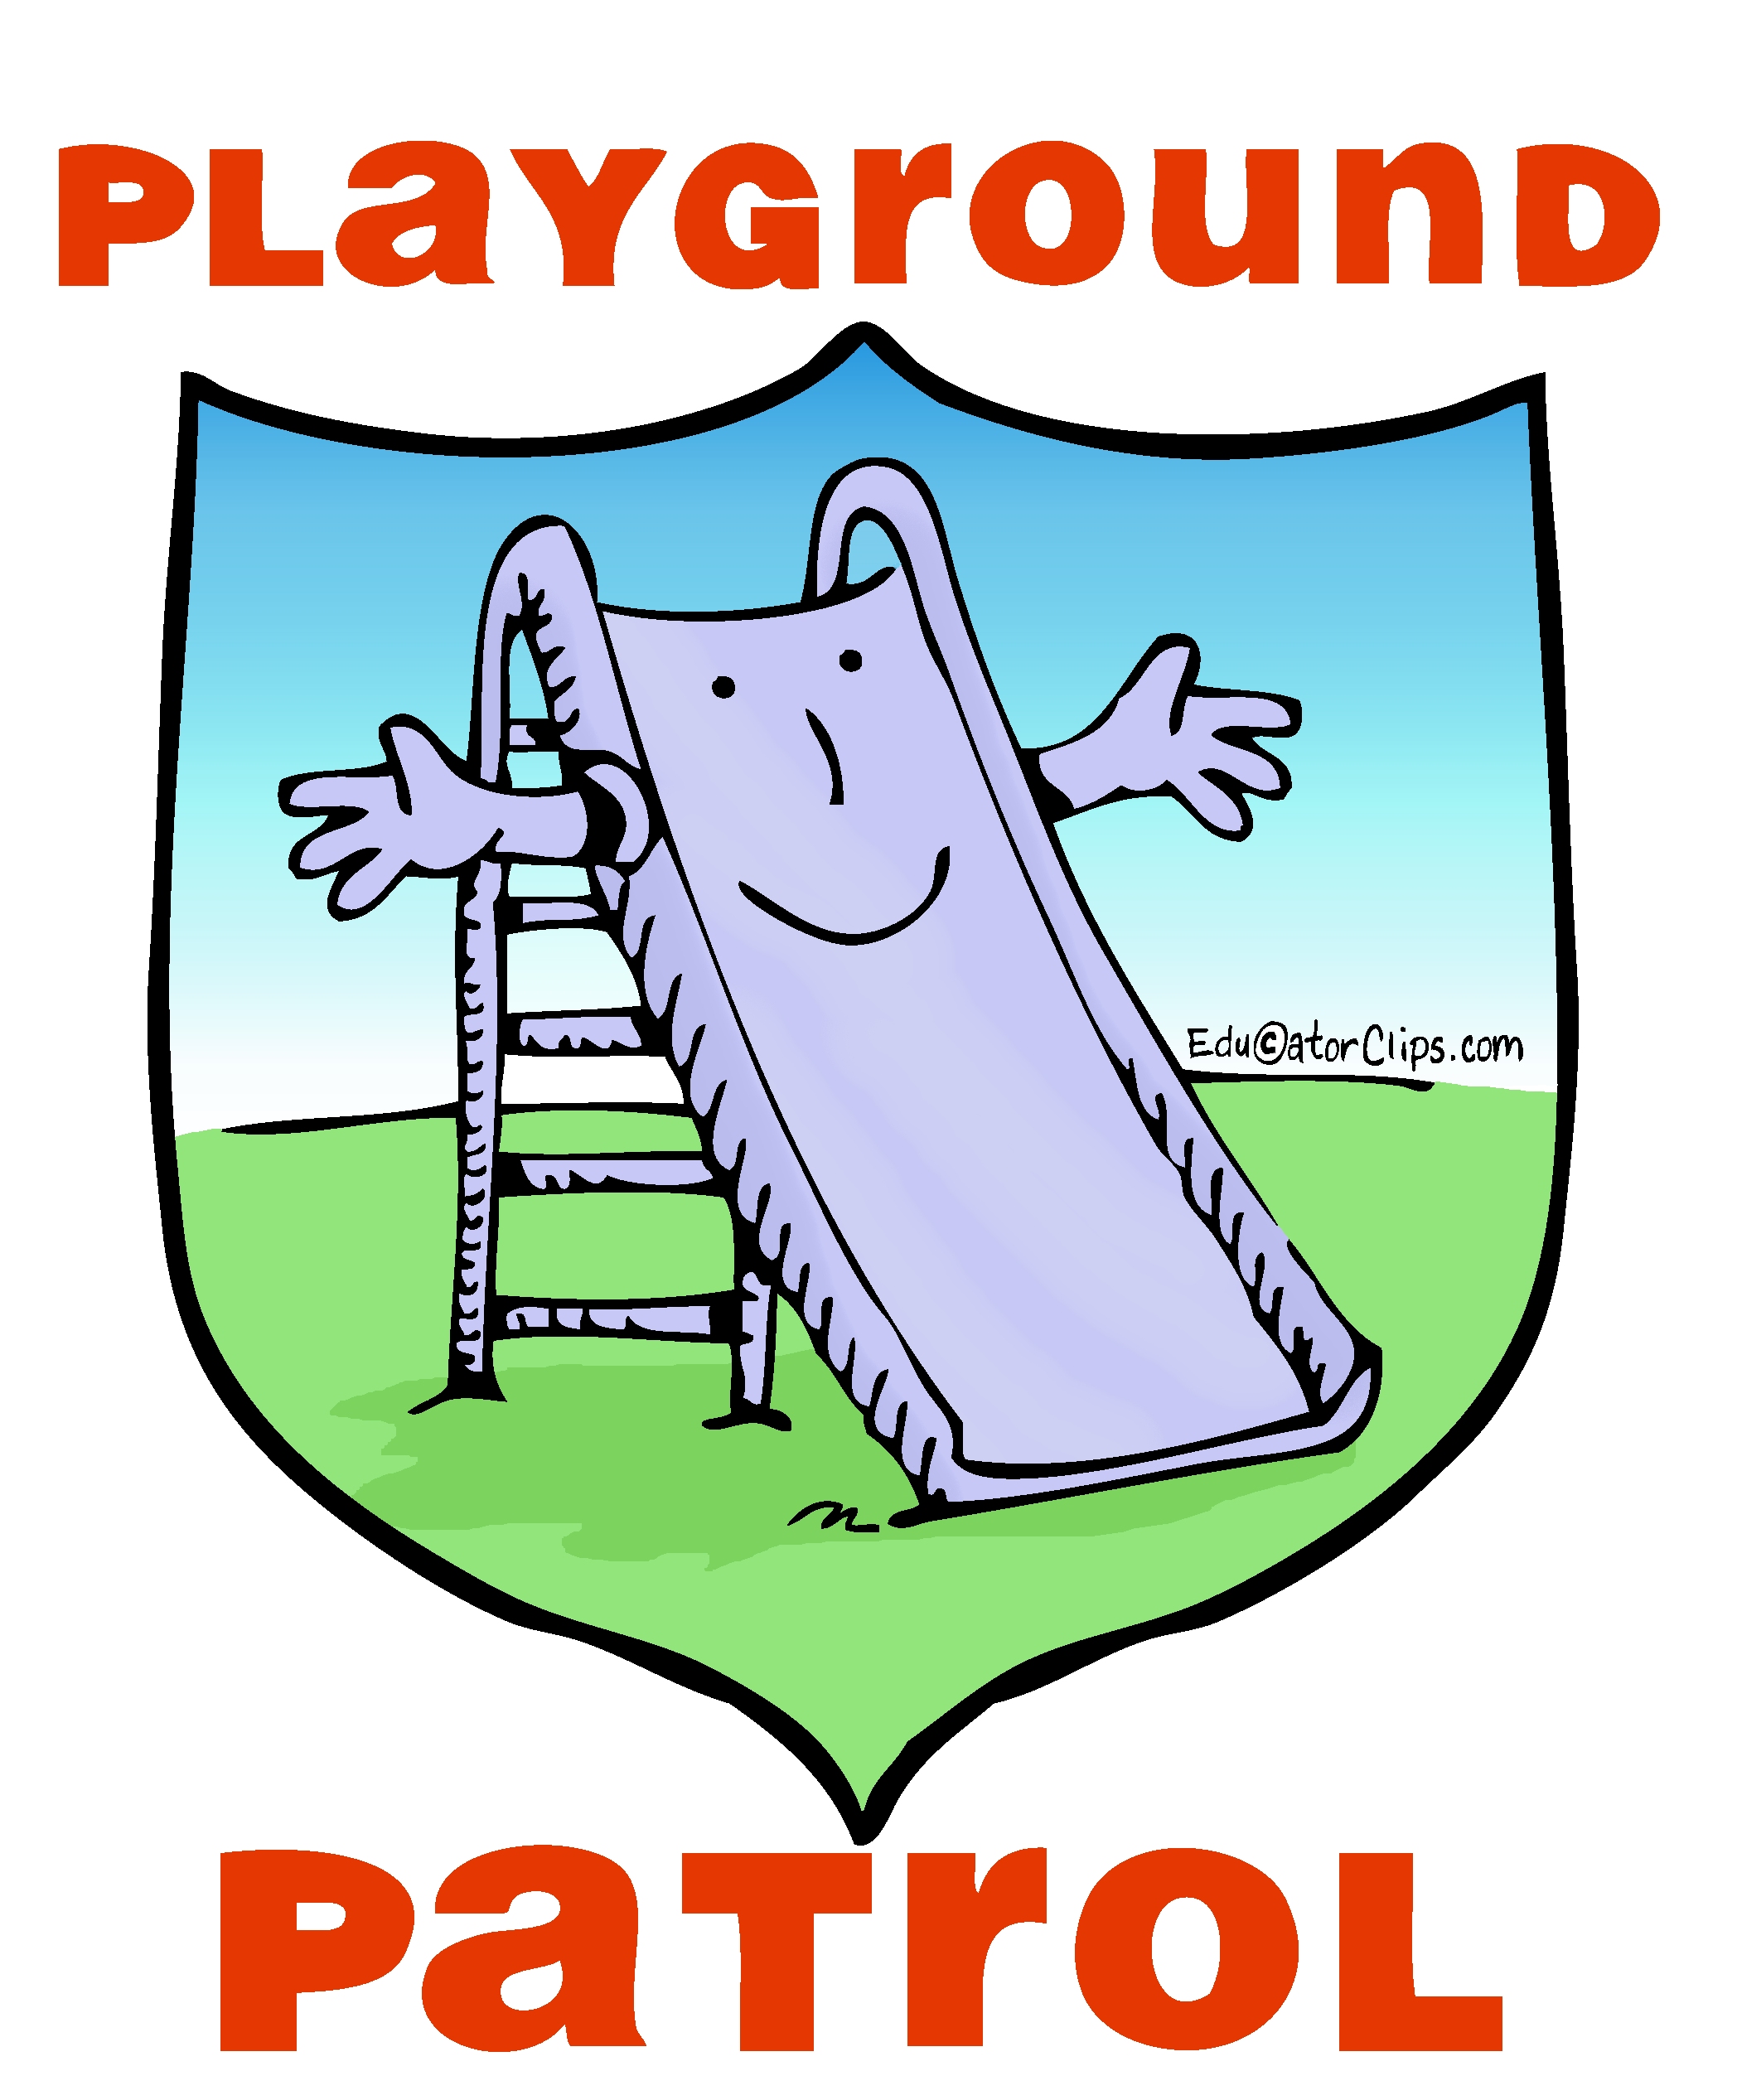 Playground Patrol Logo Clip Art